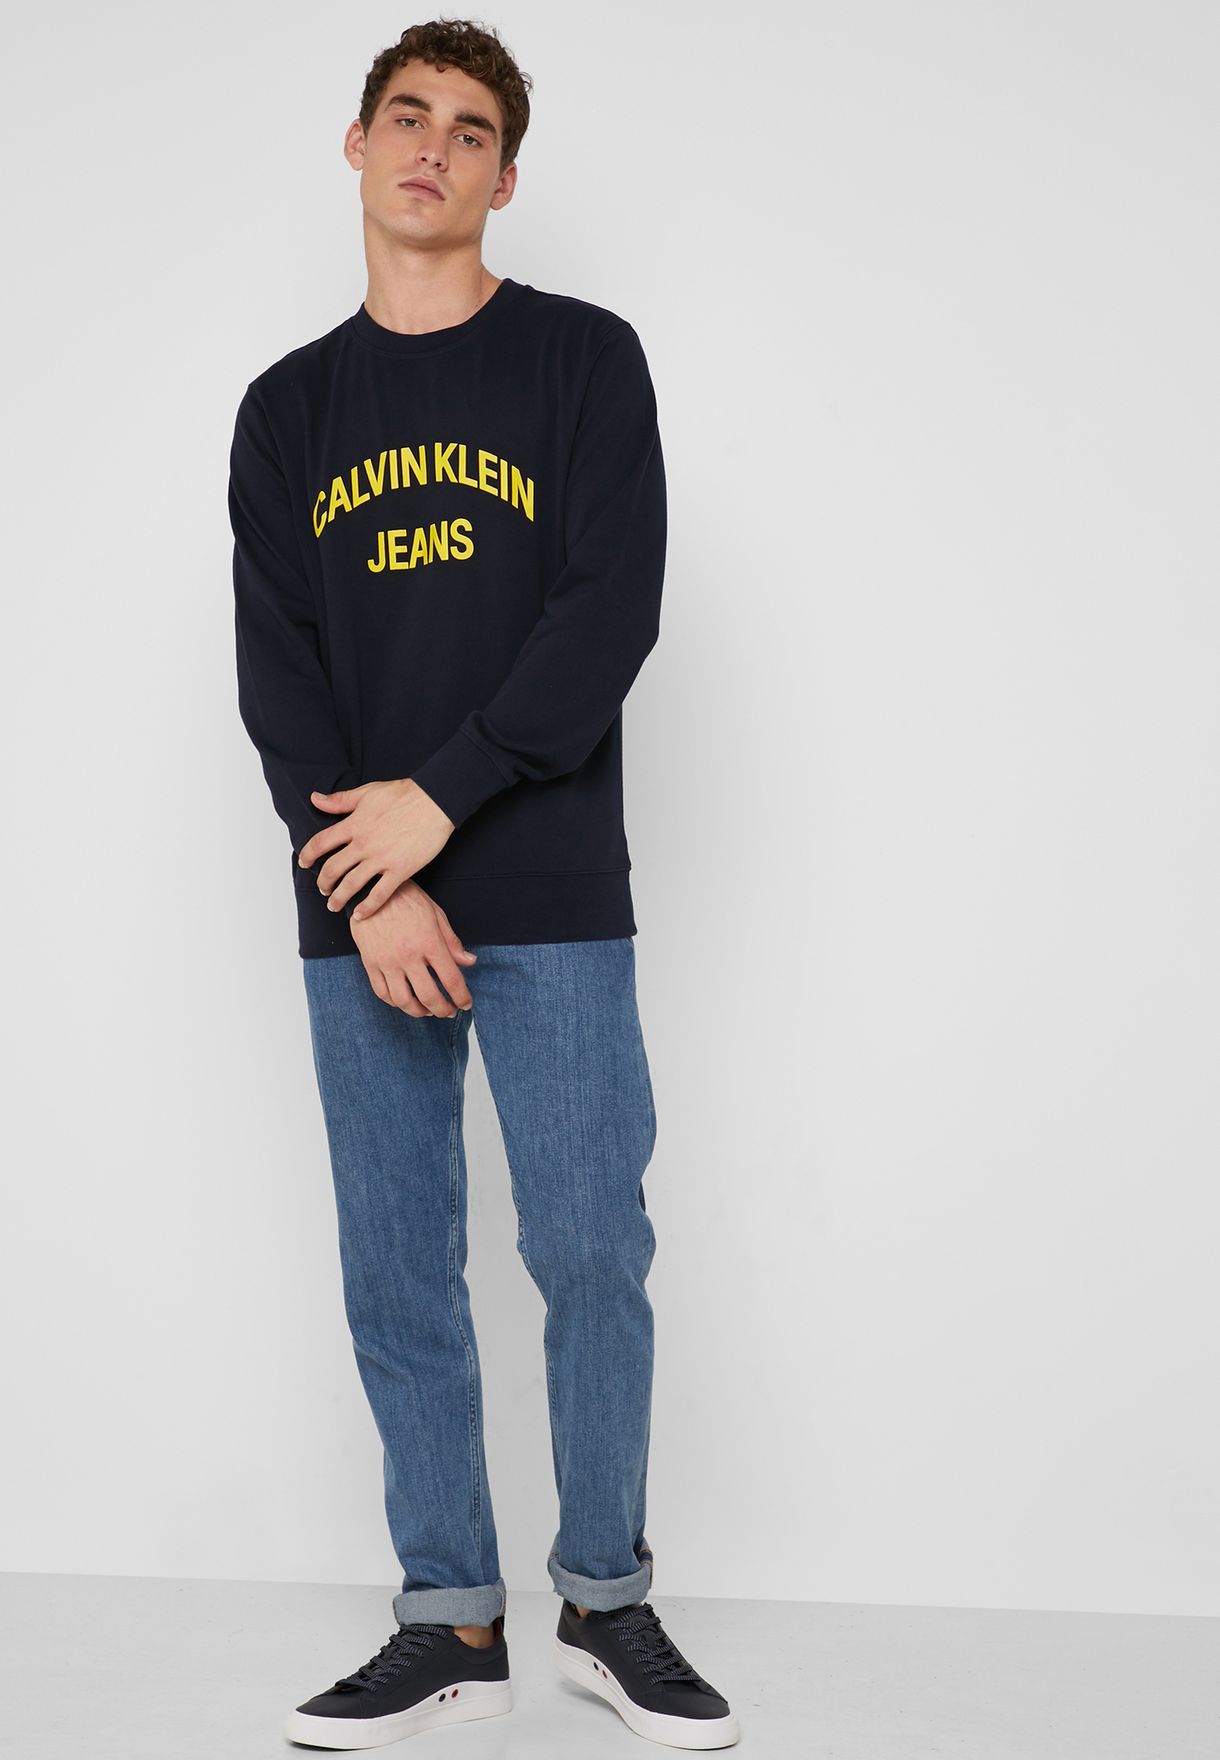 calvin klein jeans institutional hoodie